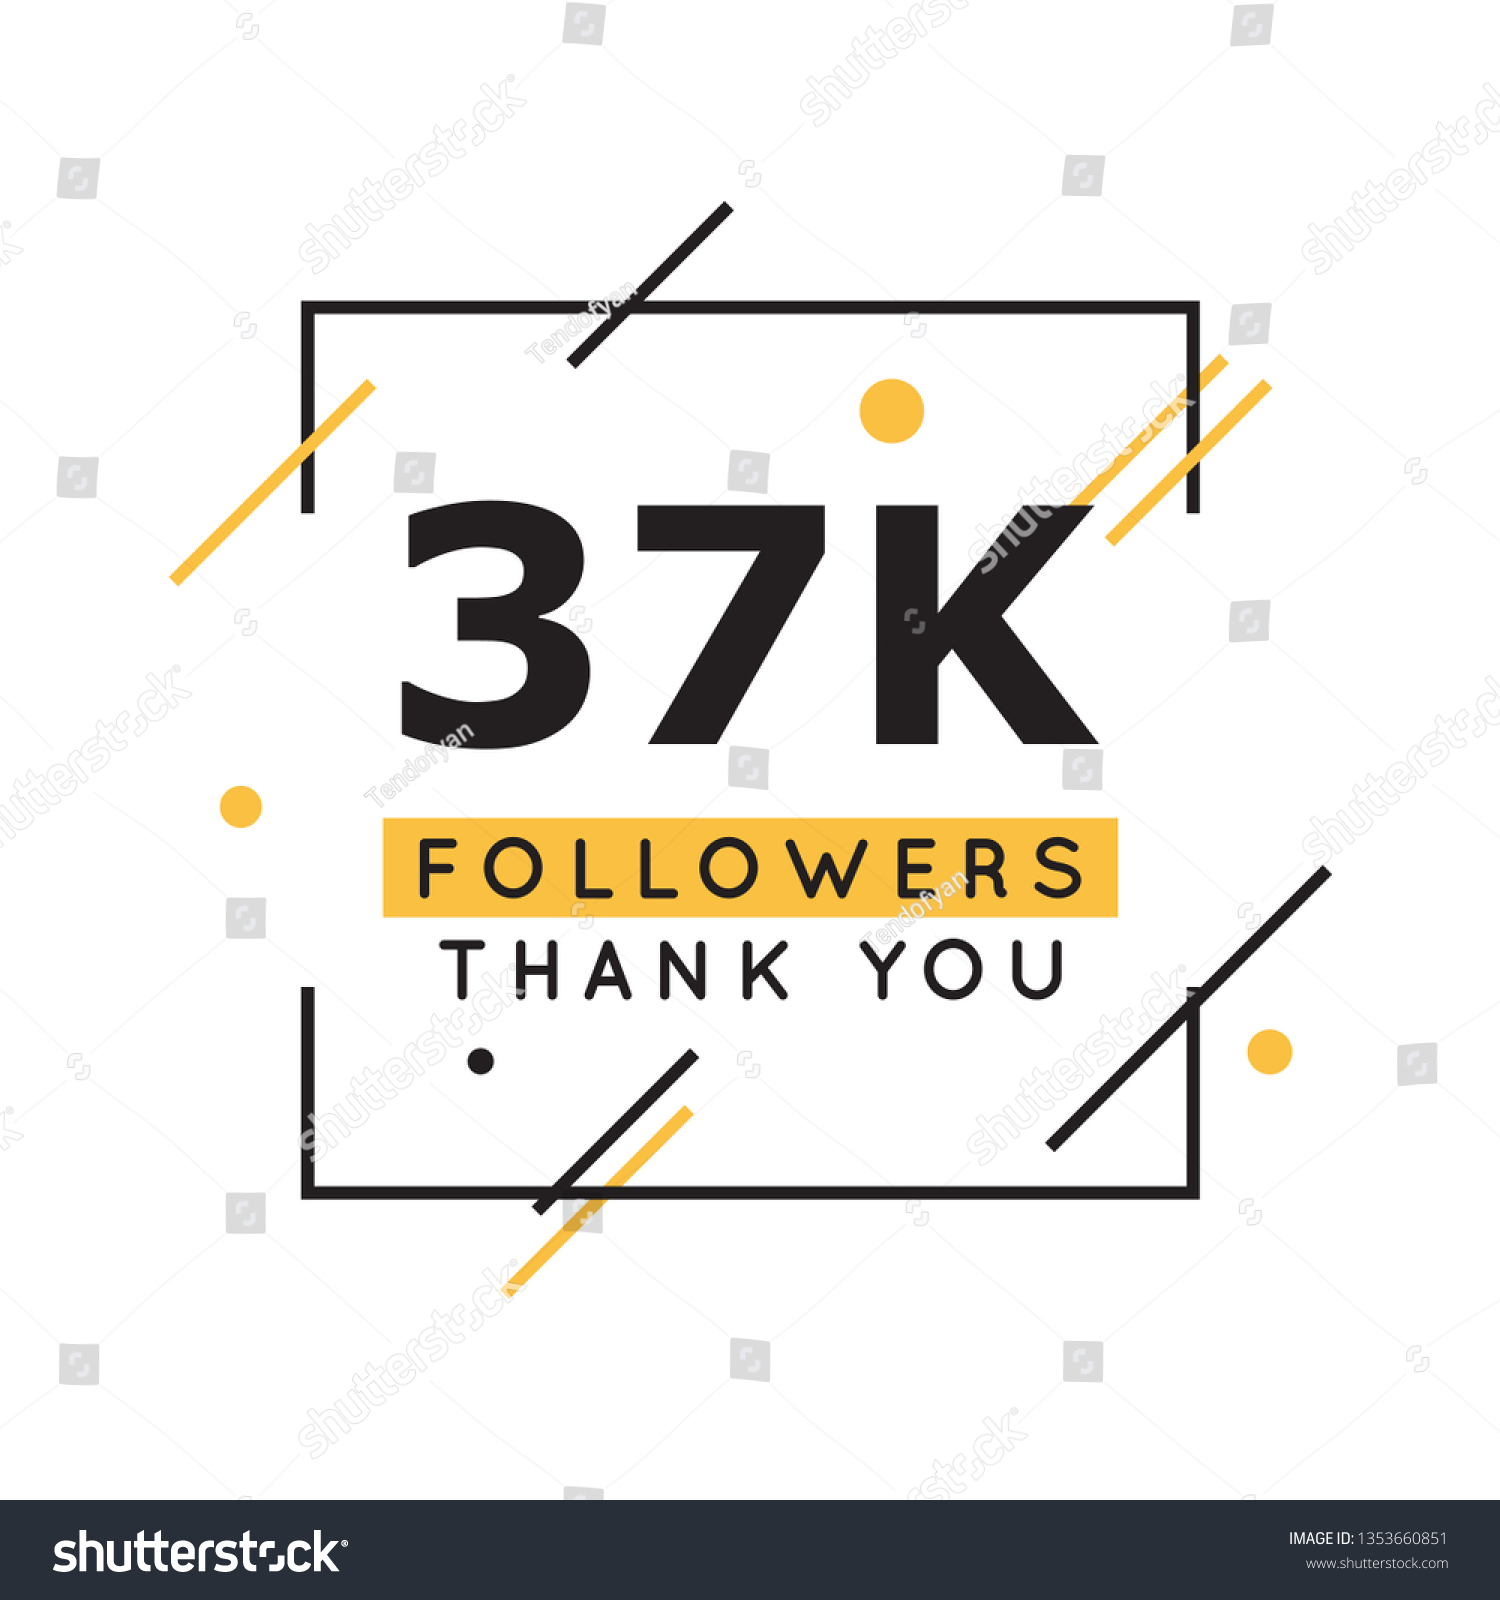 SVG of 37k followers thank you design template svg